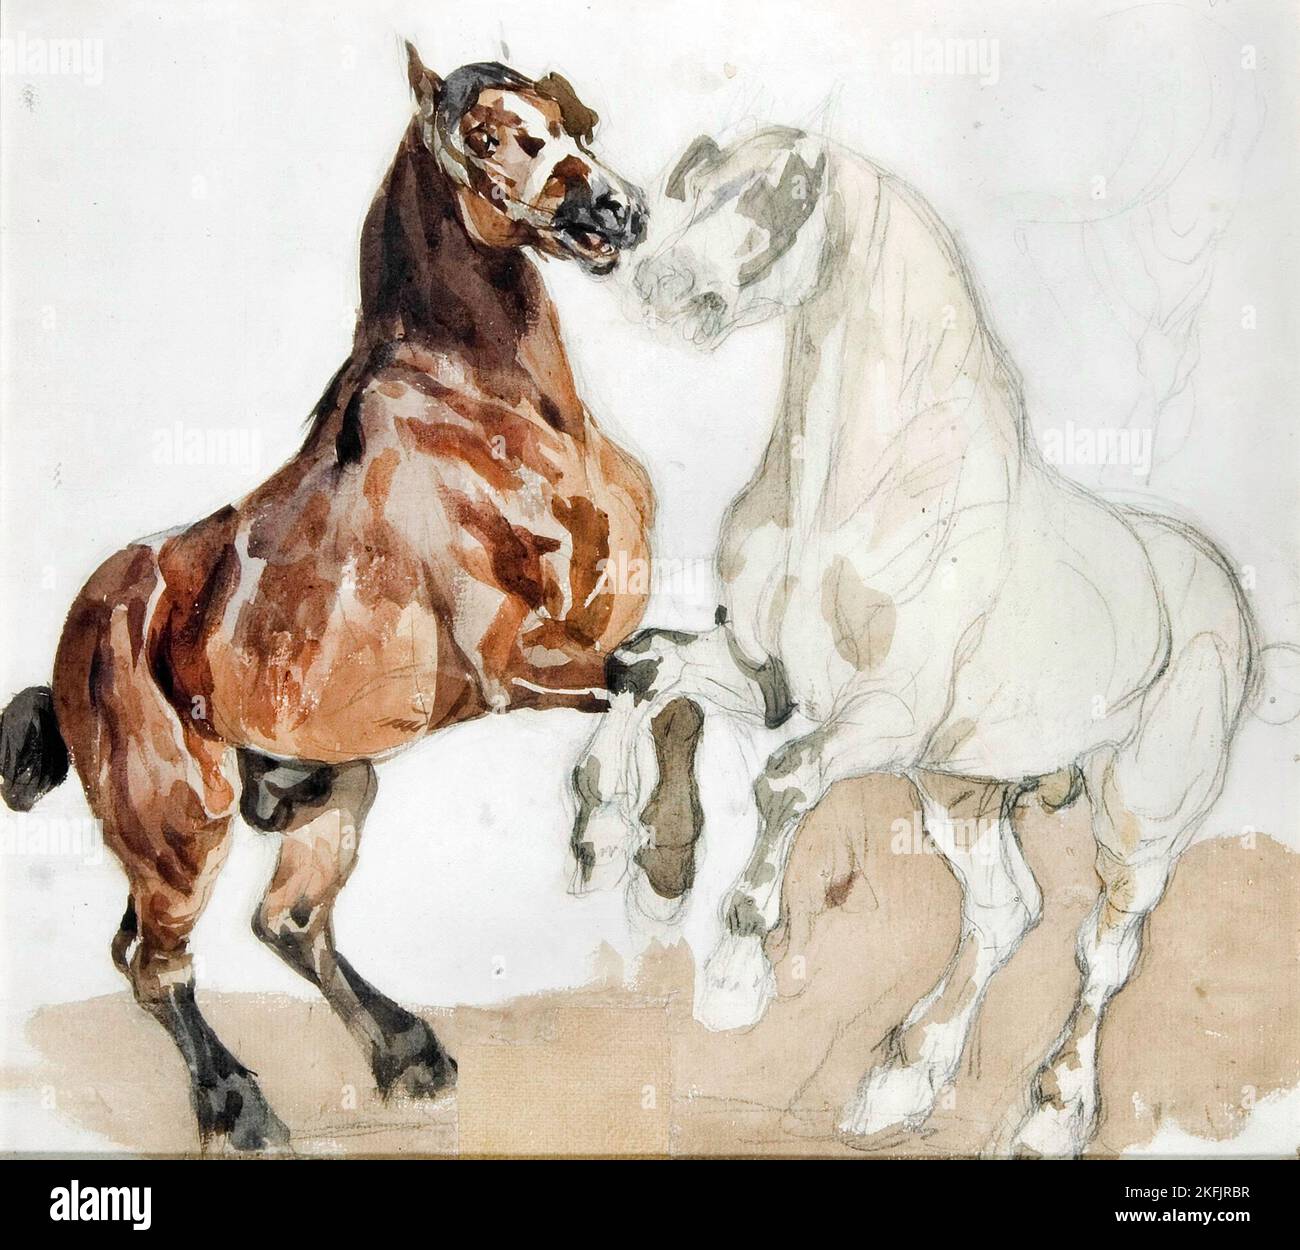 Piotr Michalowski; Horses; Watercolor; Museum of Art in Lodz, Poland. Stock Photo